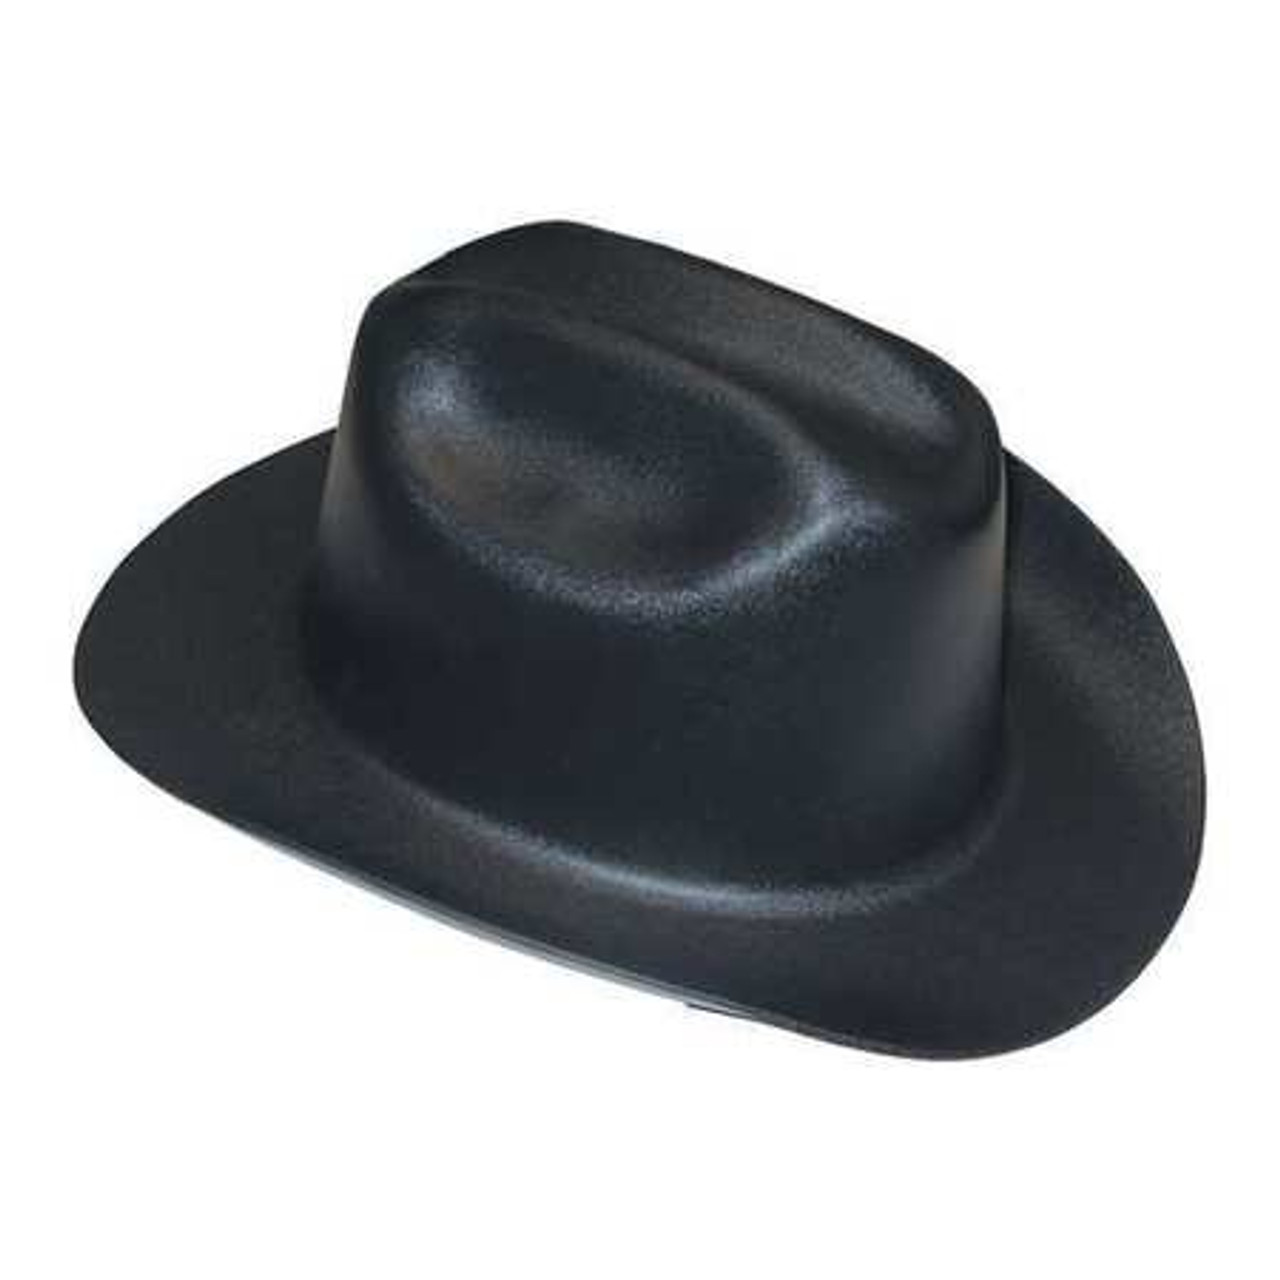 Jackson Safety Western Outlaw Hard Hat (19500), Wide 360-Degree Brim, 4-Pt.  Ratchet Suspension, White, 4 Hats / Case 